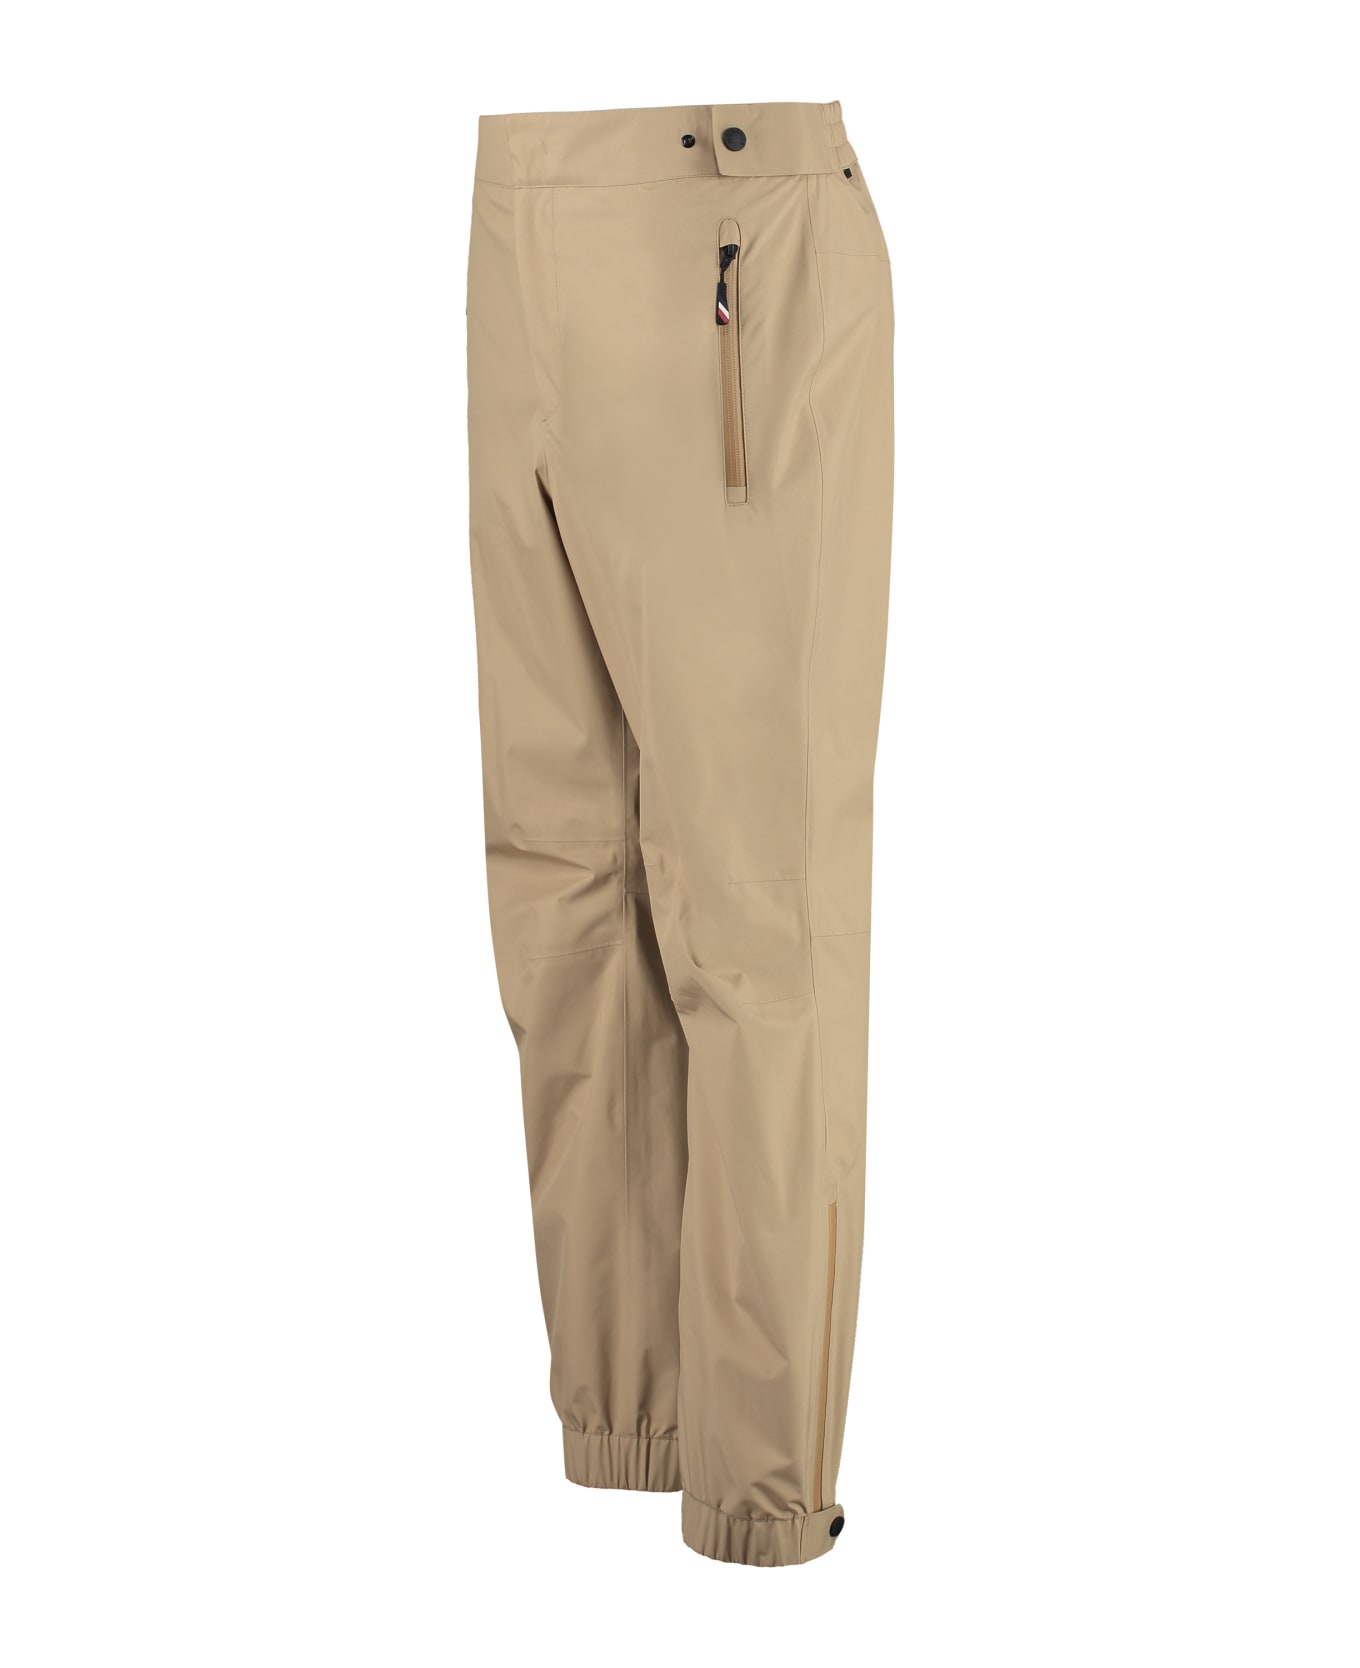 Moncler Grenoble Technical Fabric Pants - Beige